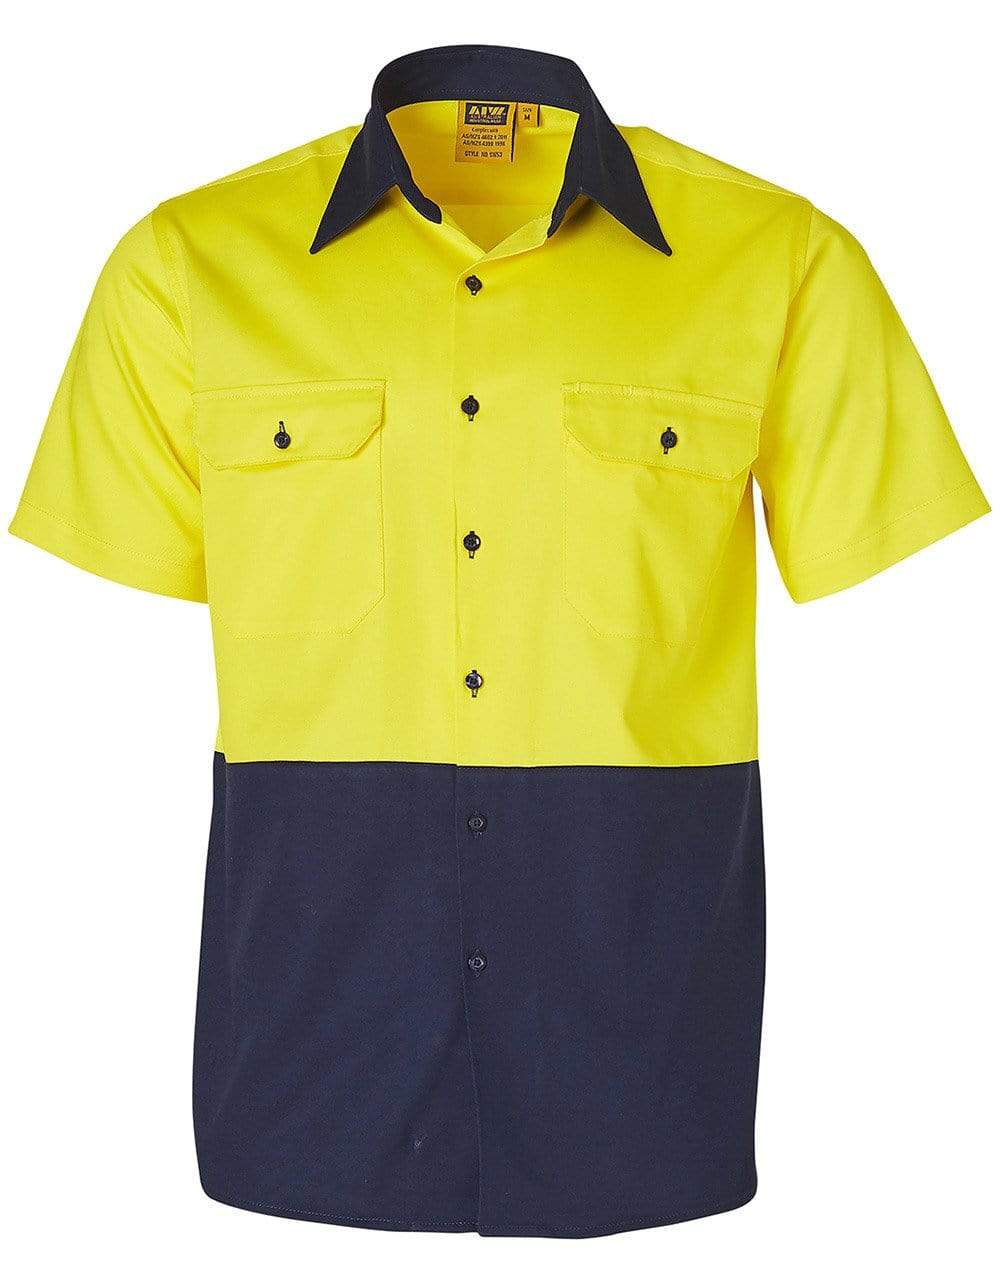 Cotton Drill Safety Shirt SW53 Work Wear Australian Industrial Wear S Fluoro Yellow/Navy 